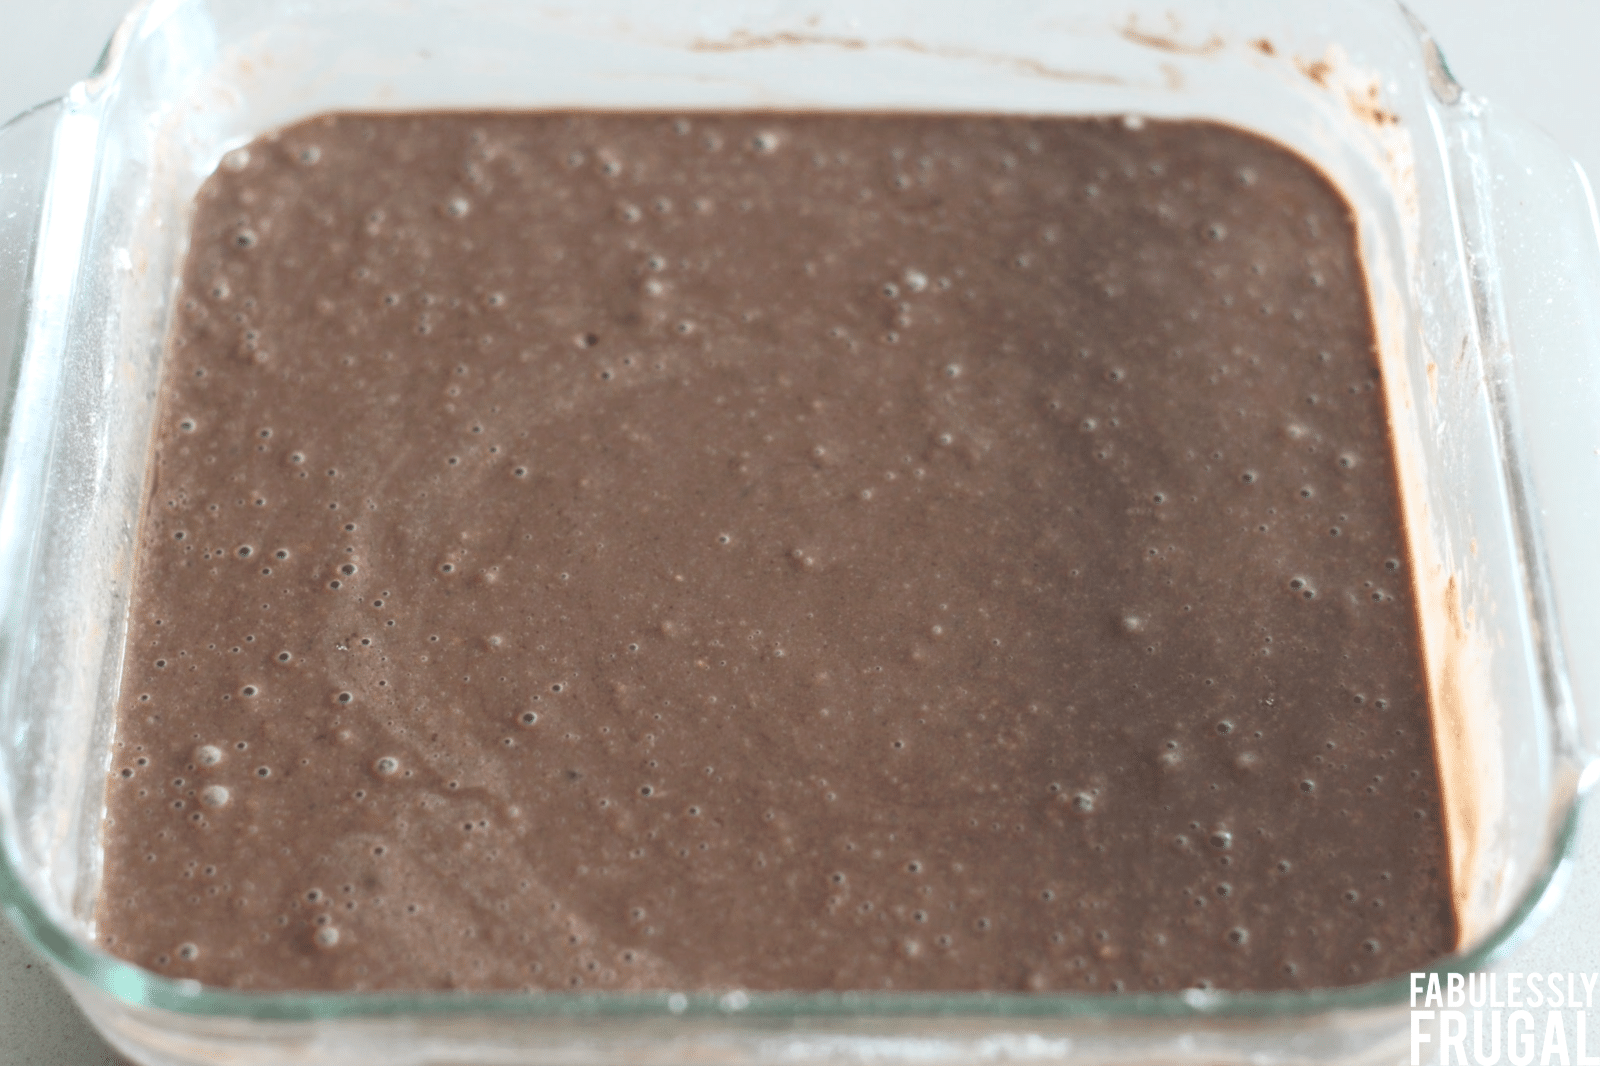 Mixed chocolate wacky cake batter ready to bake